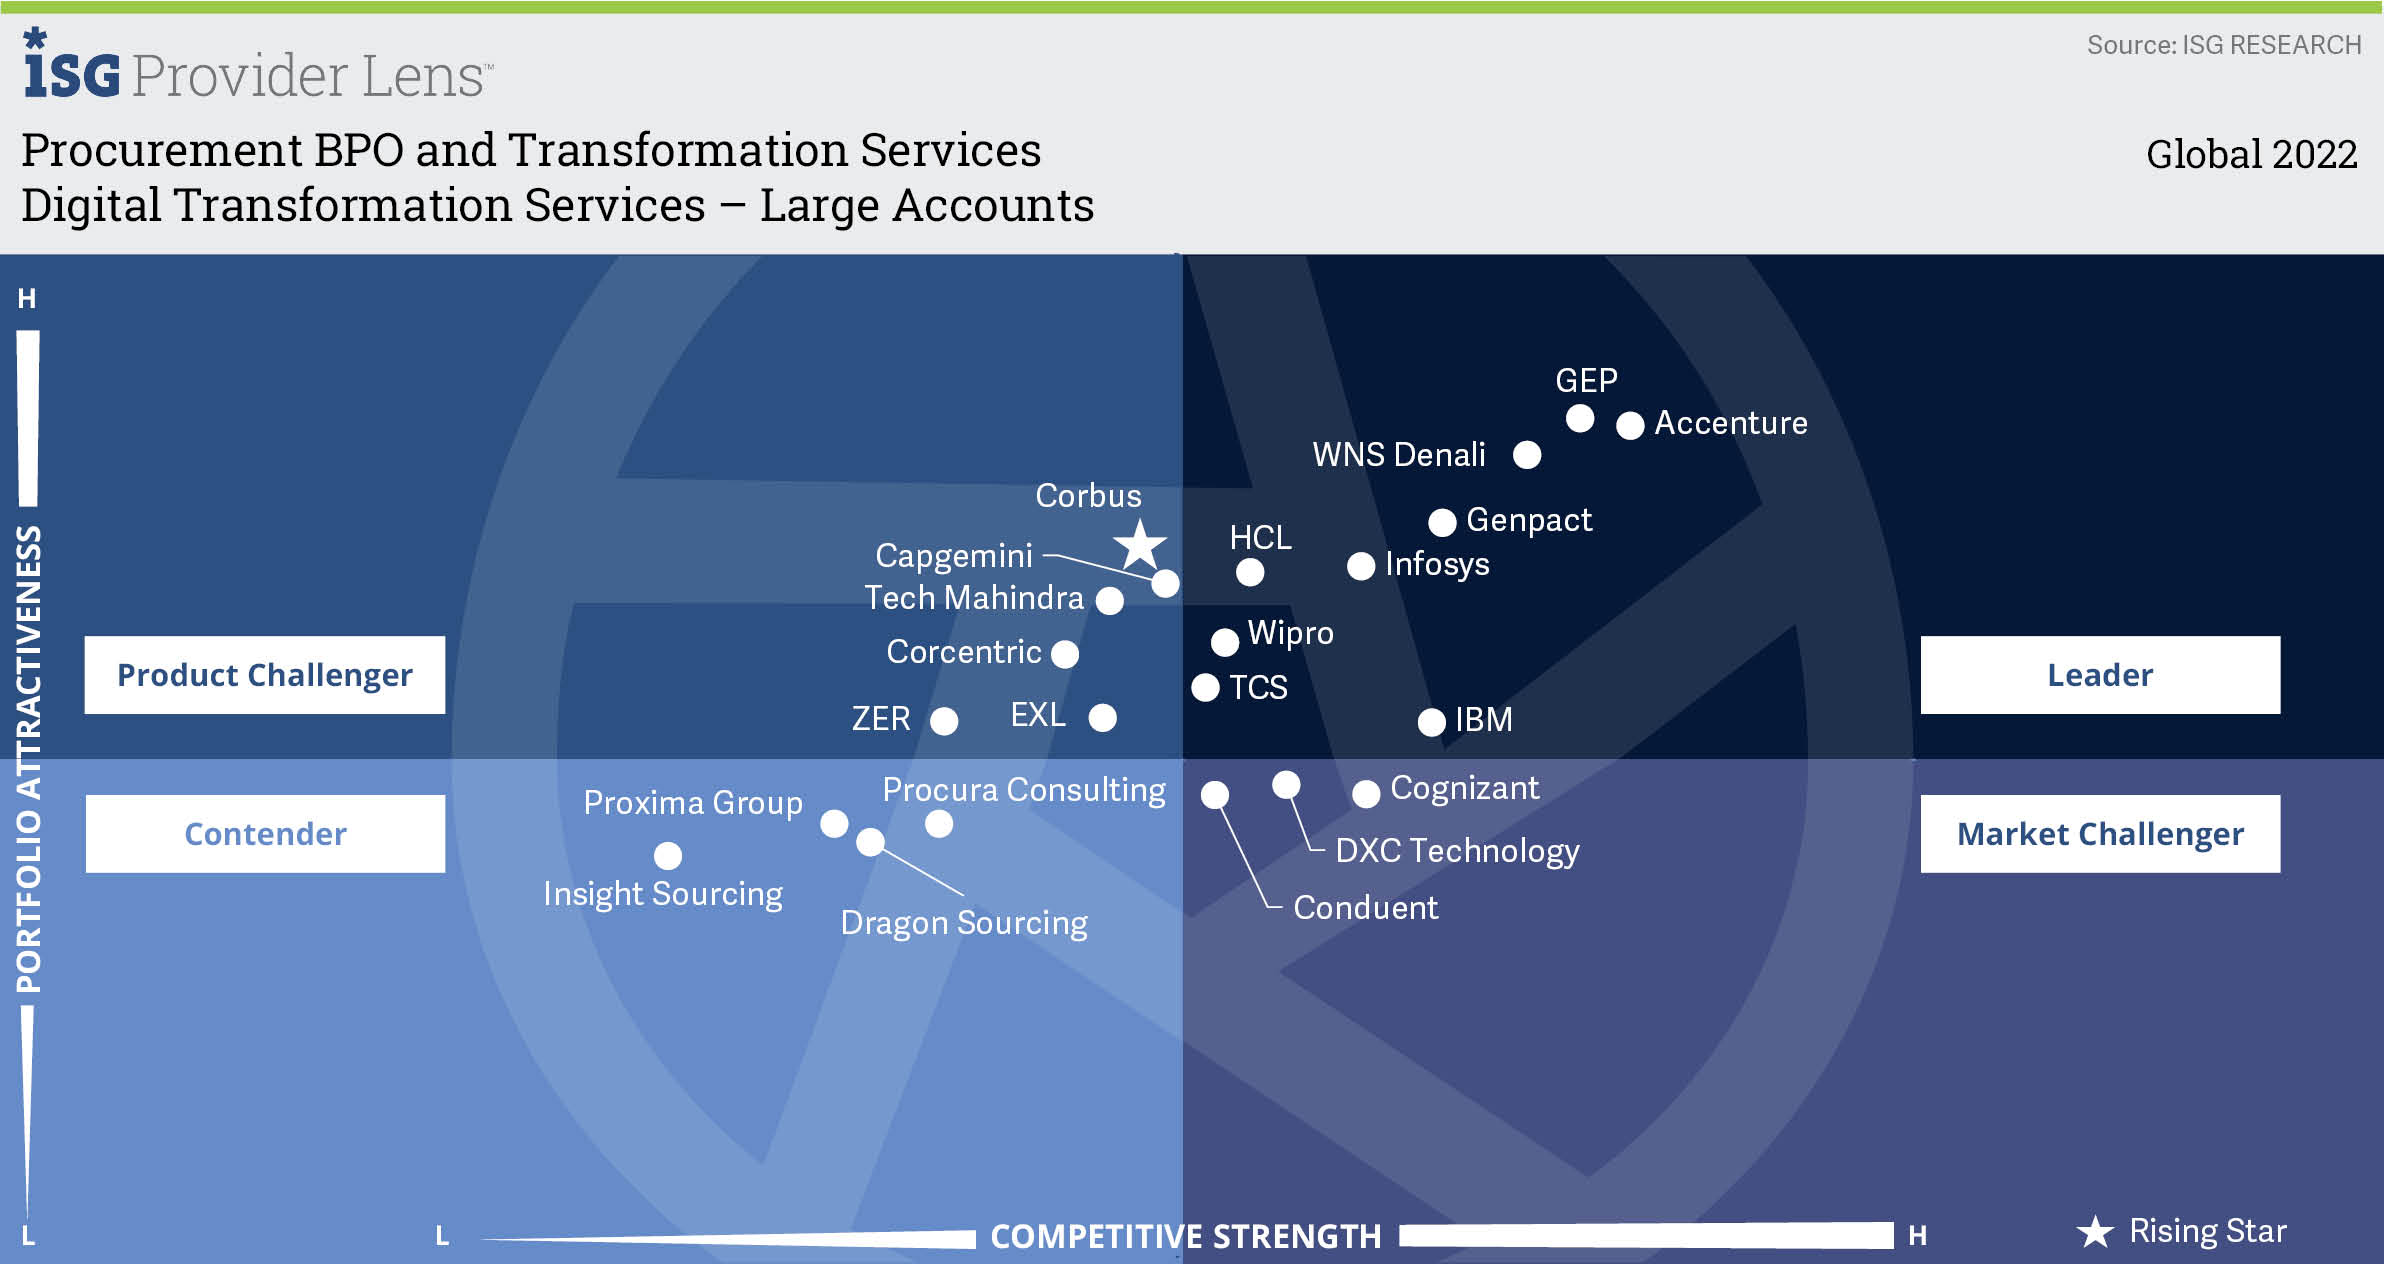 Digital Transformation Services